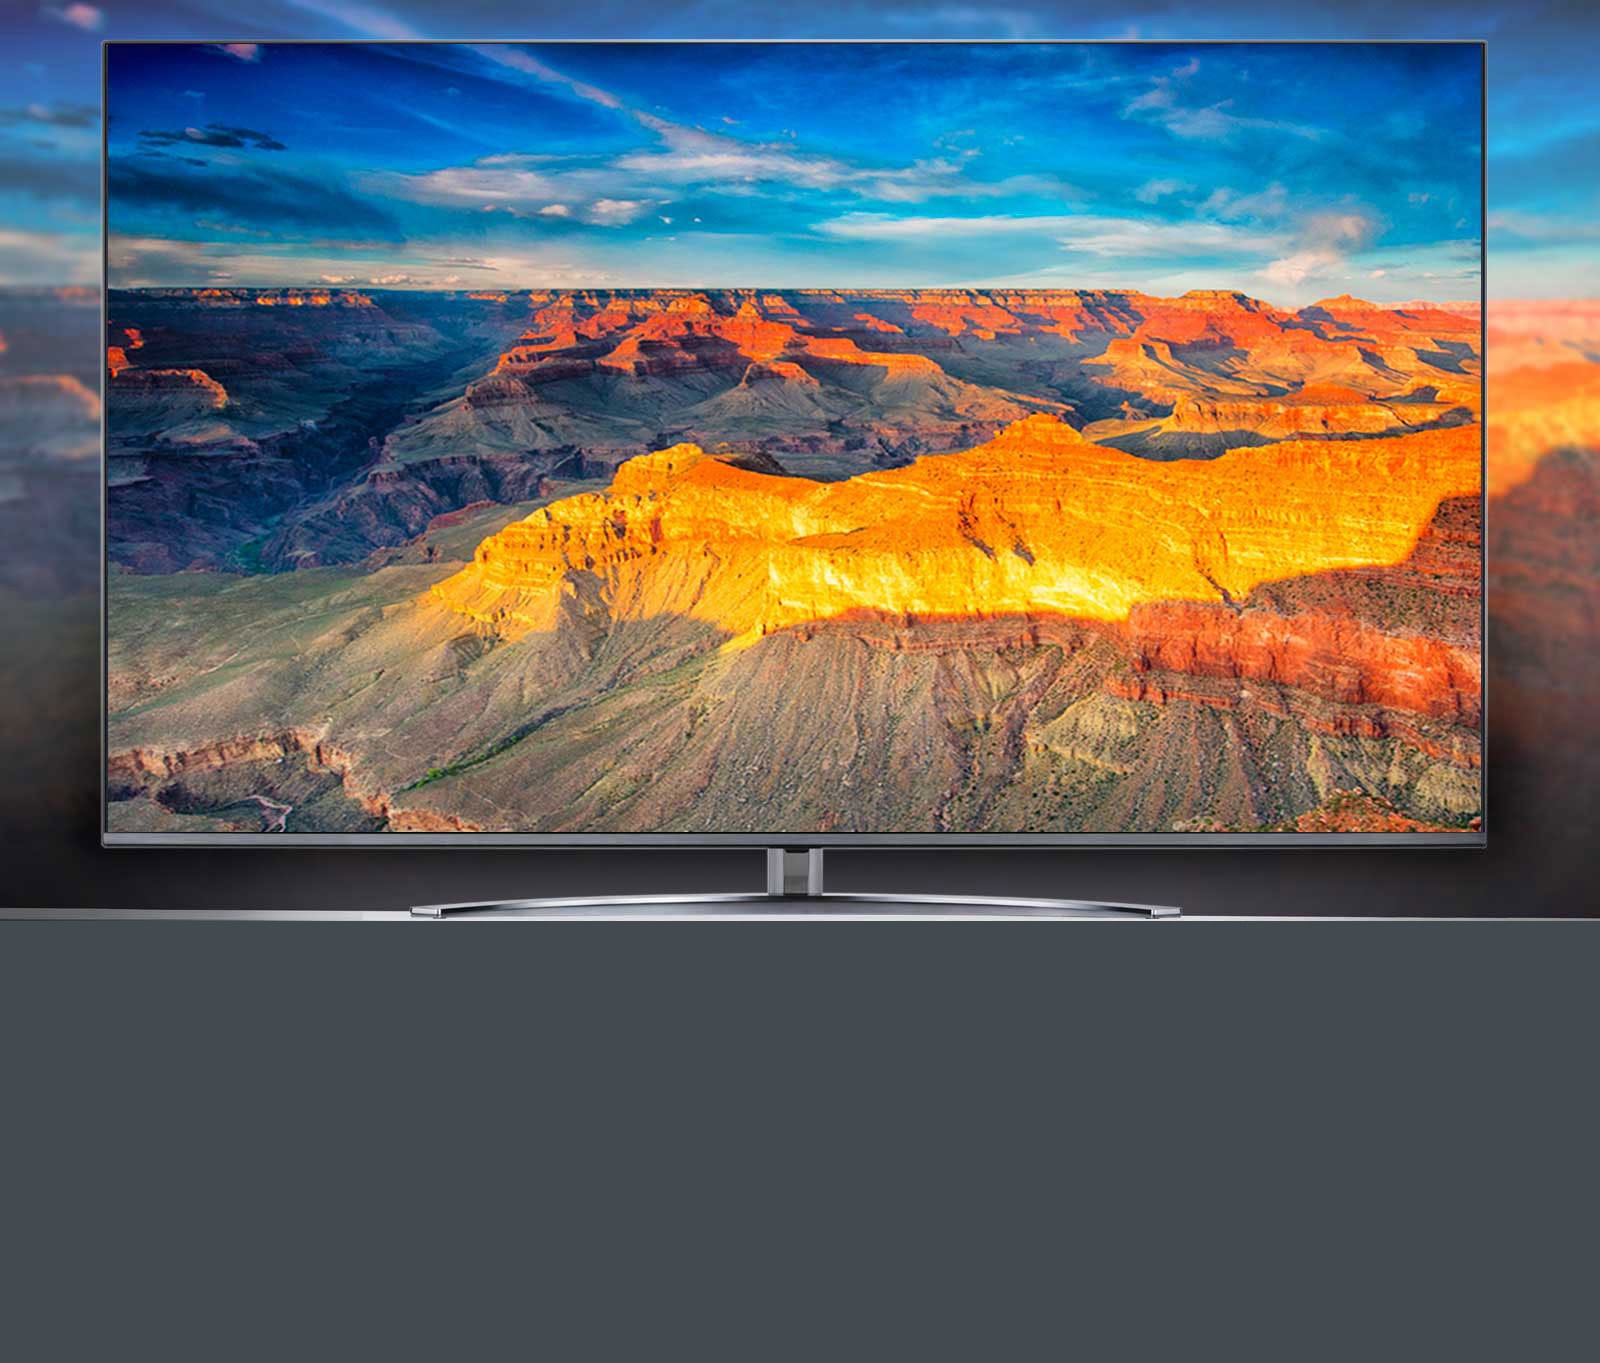 <br/><br/>NanoCell 8K TV - Measured in Accordance to International Standards1